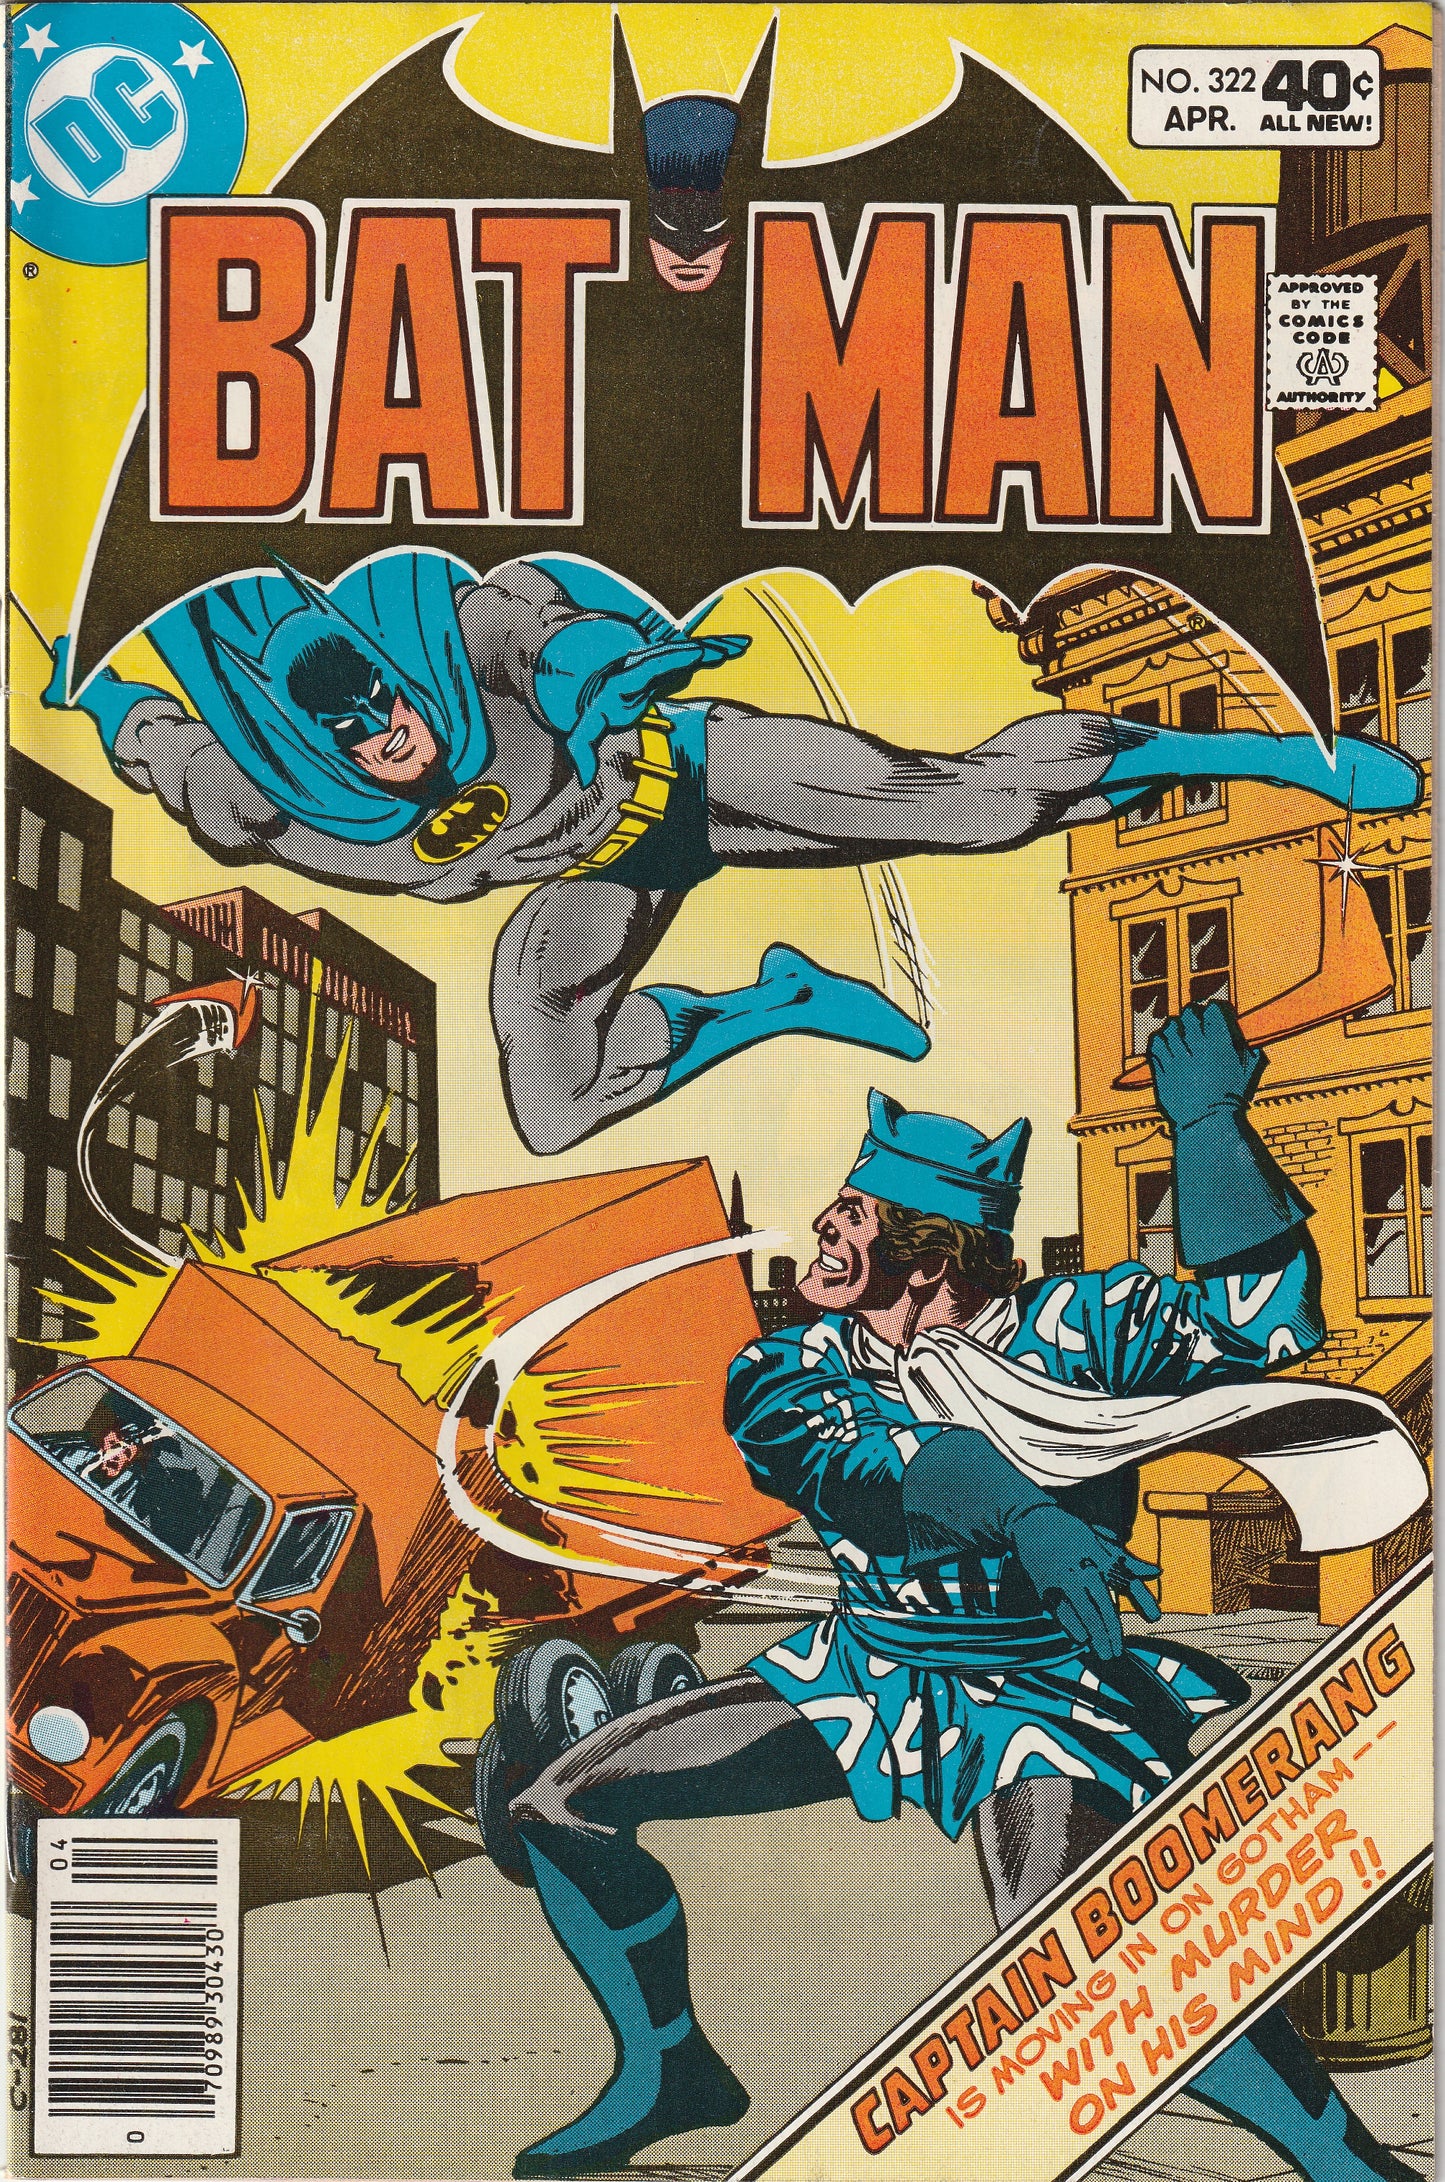 Batman #322 (1980) - Catwoman appearance